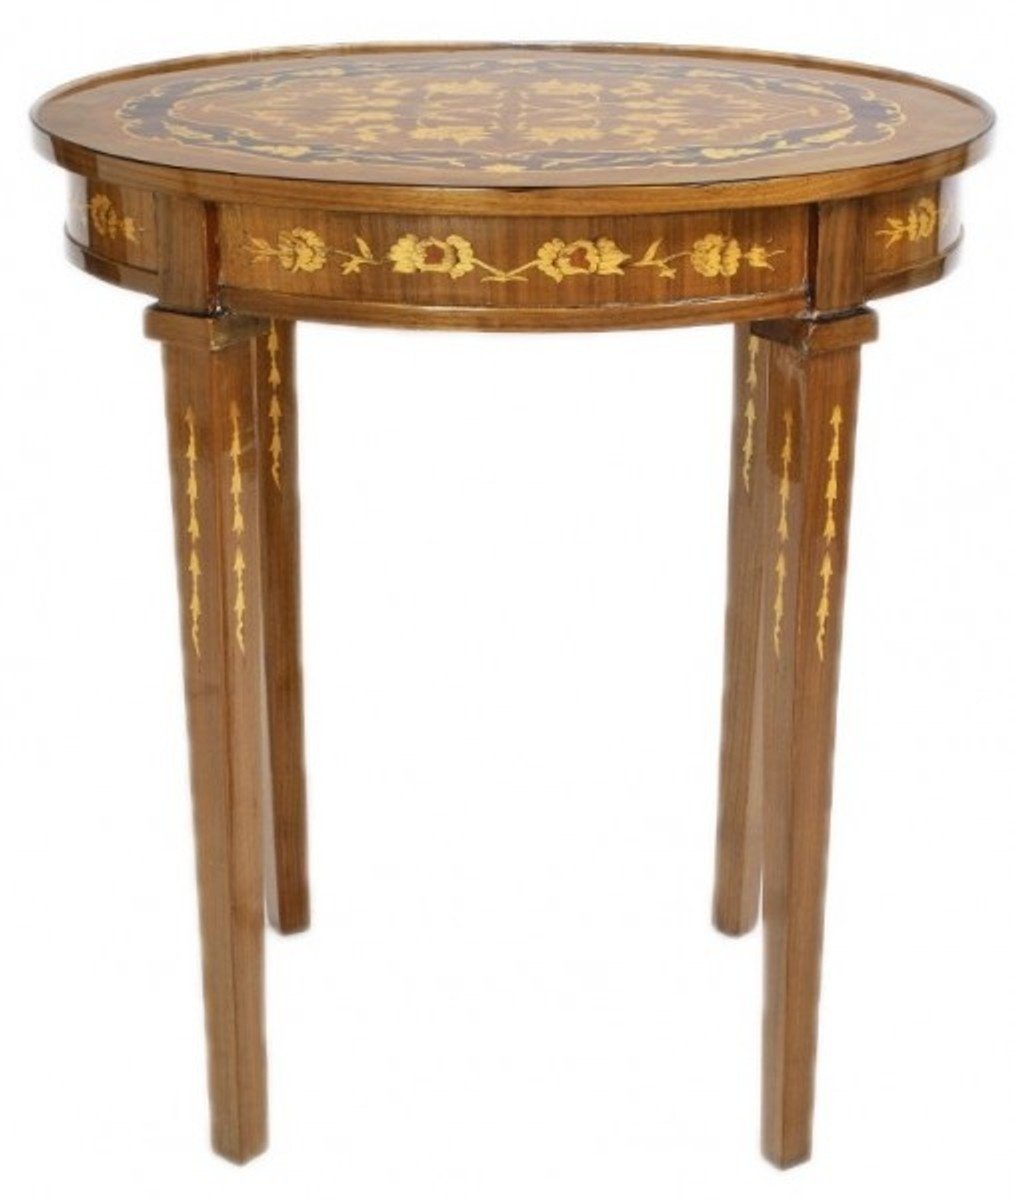 Casa Padrino Barock Beistelltisch Mahagoni Intarsien H80 x 50cm - Ludwig XVI Antik Stil Tisch - Möbel